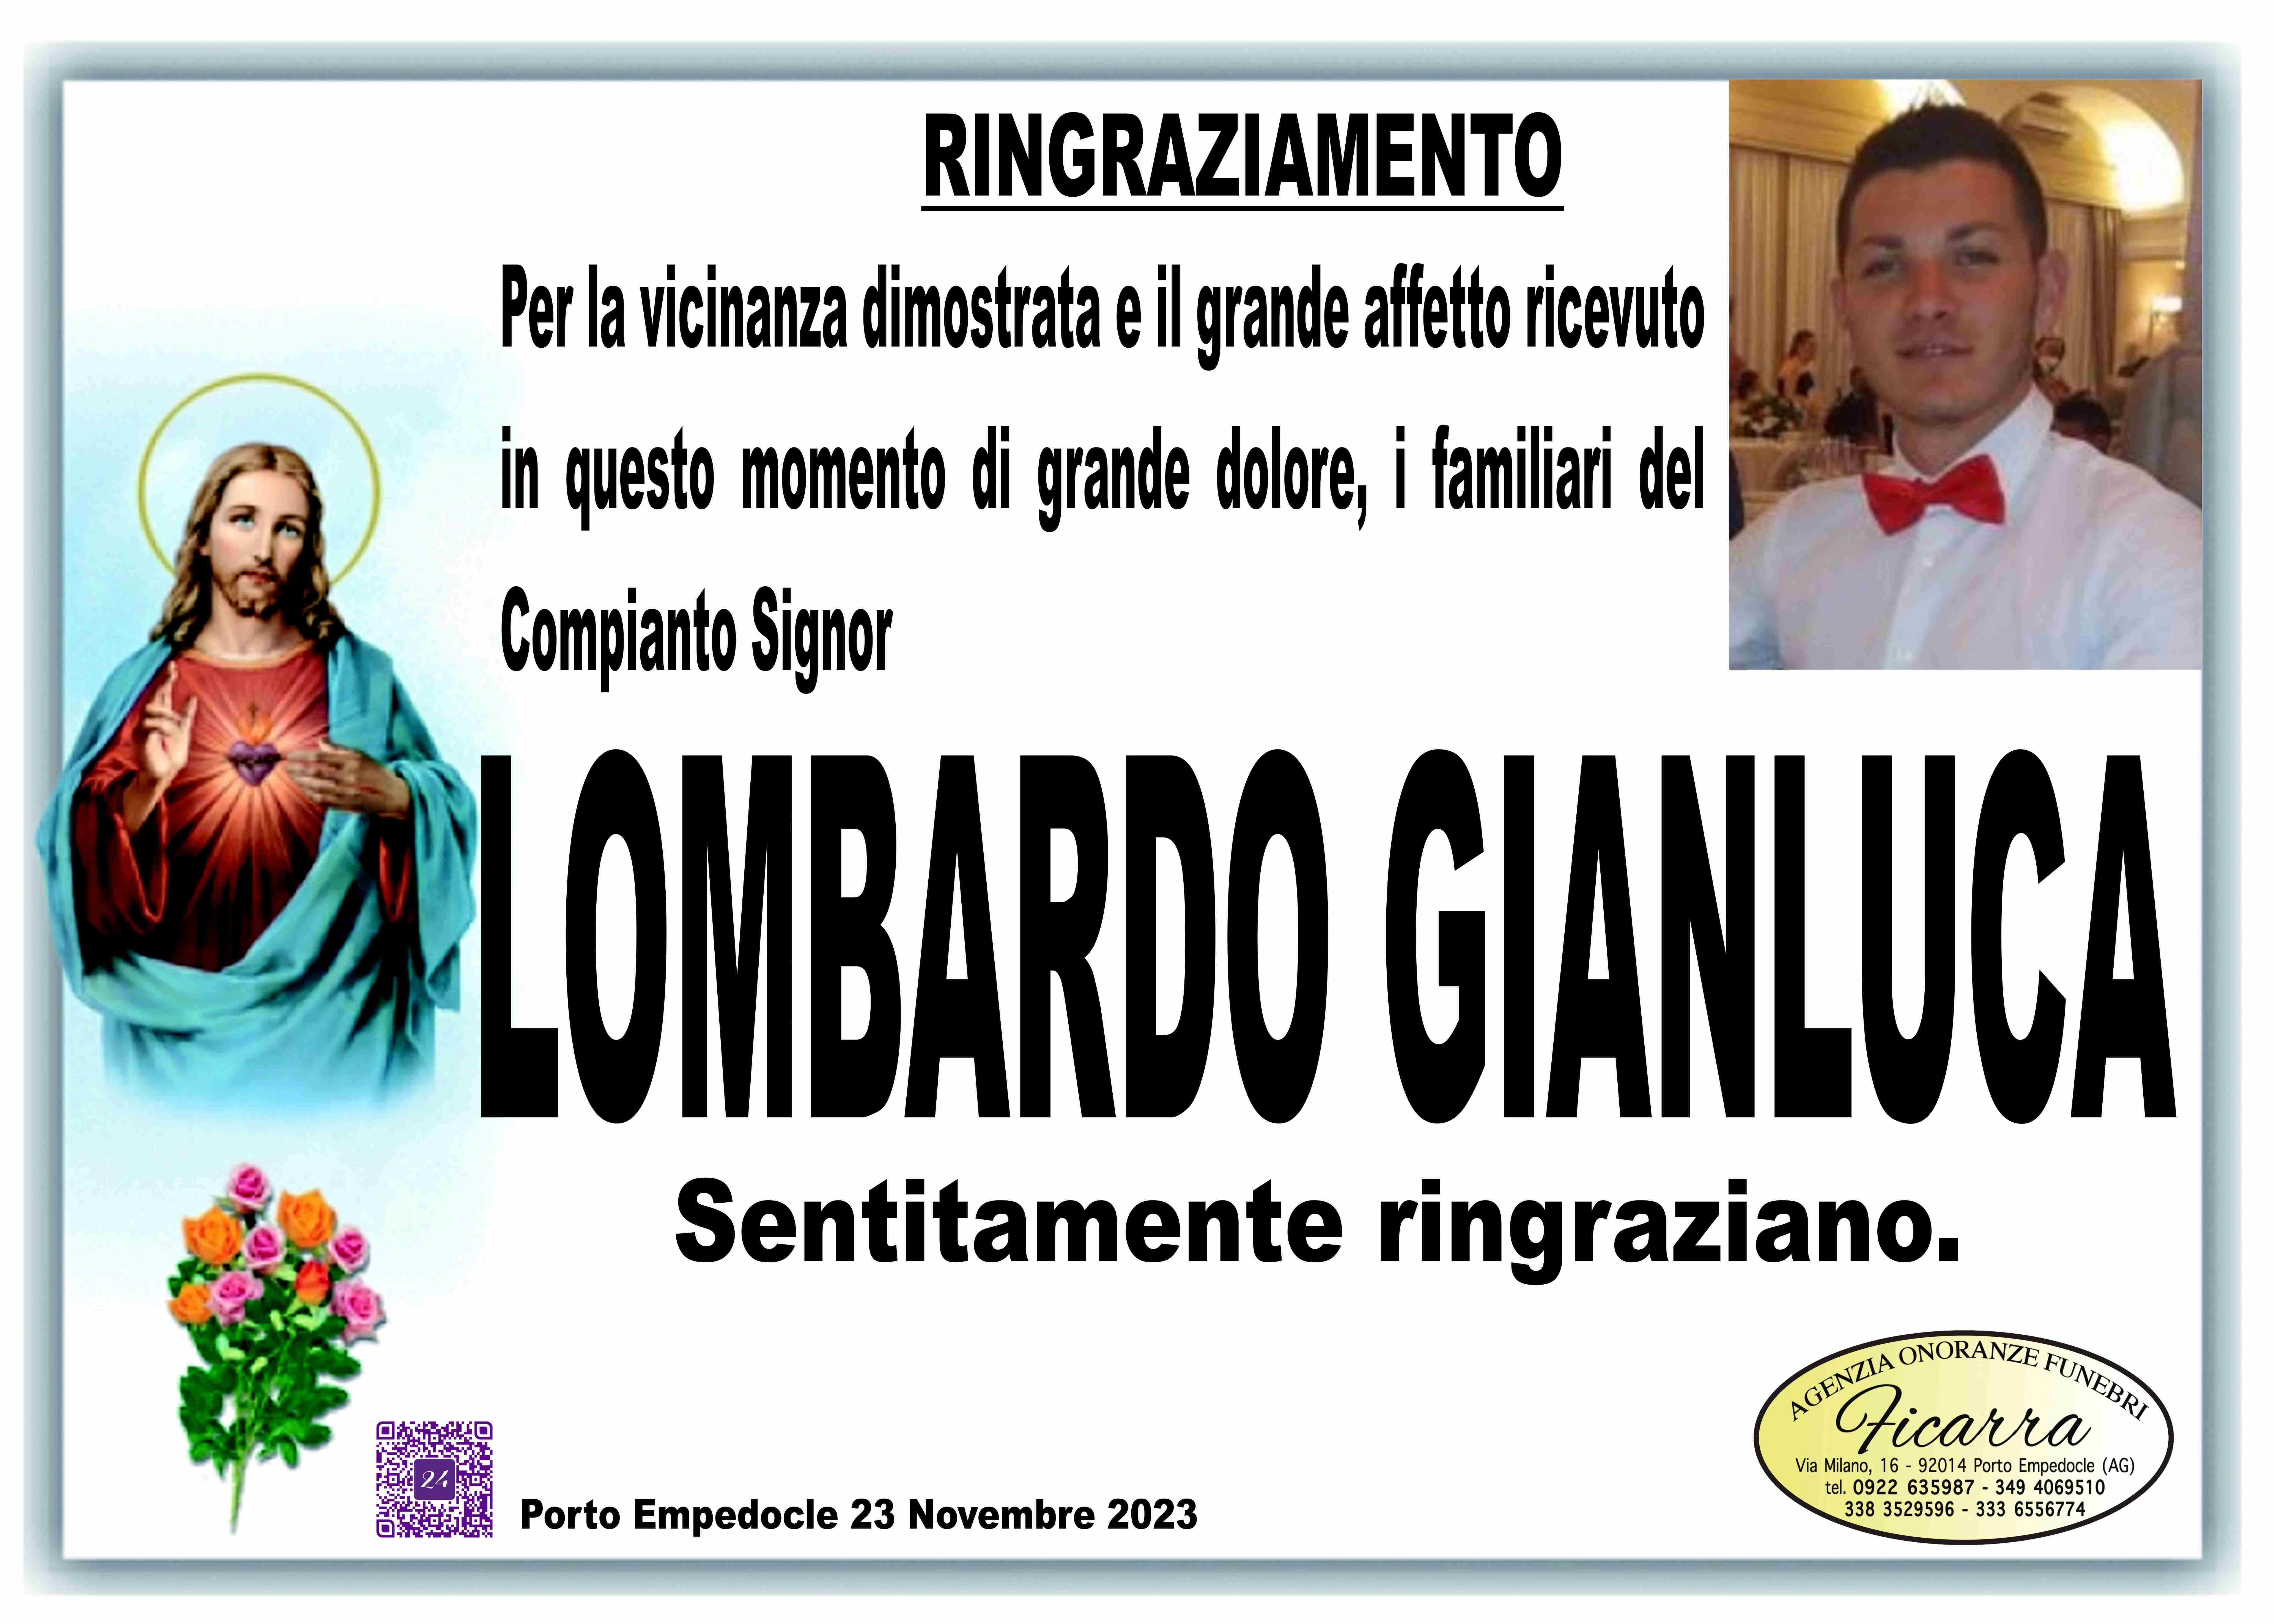 Gianluca Lombardo